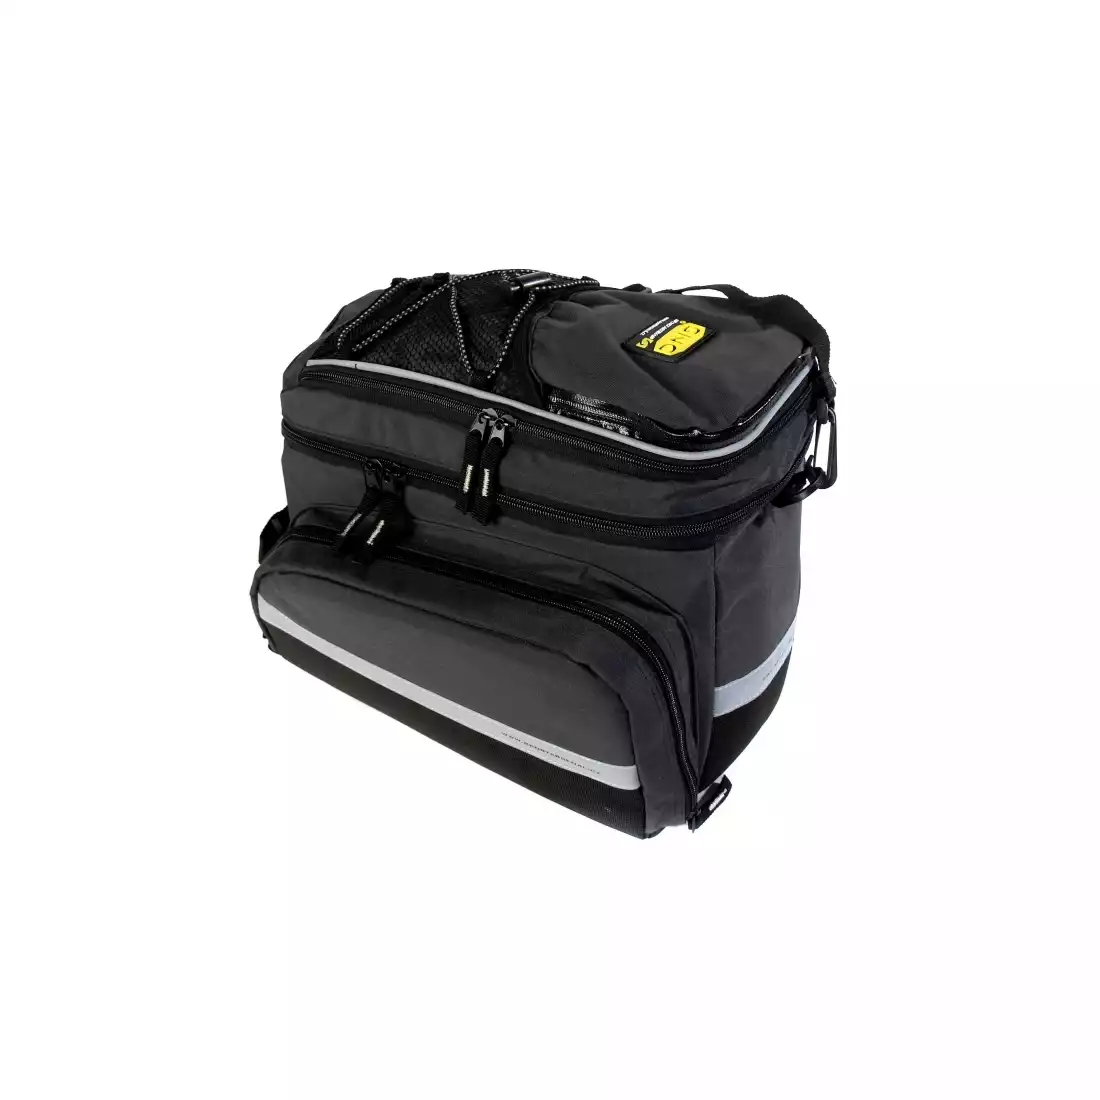 SPORT ARSENAL SNC 550 Sakwa wielofunkcyjna na bagażnik